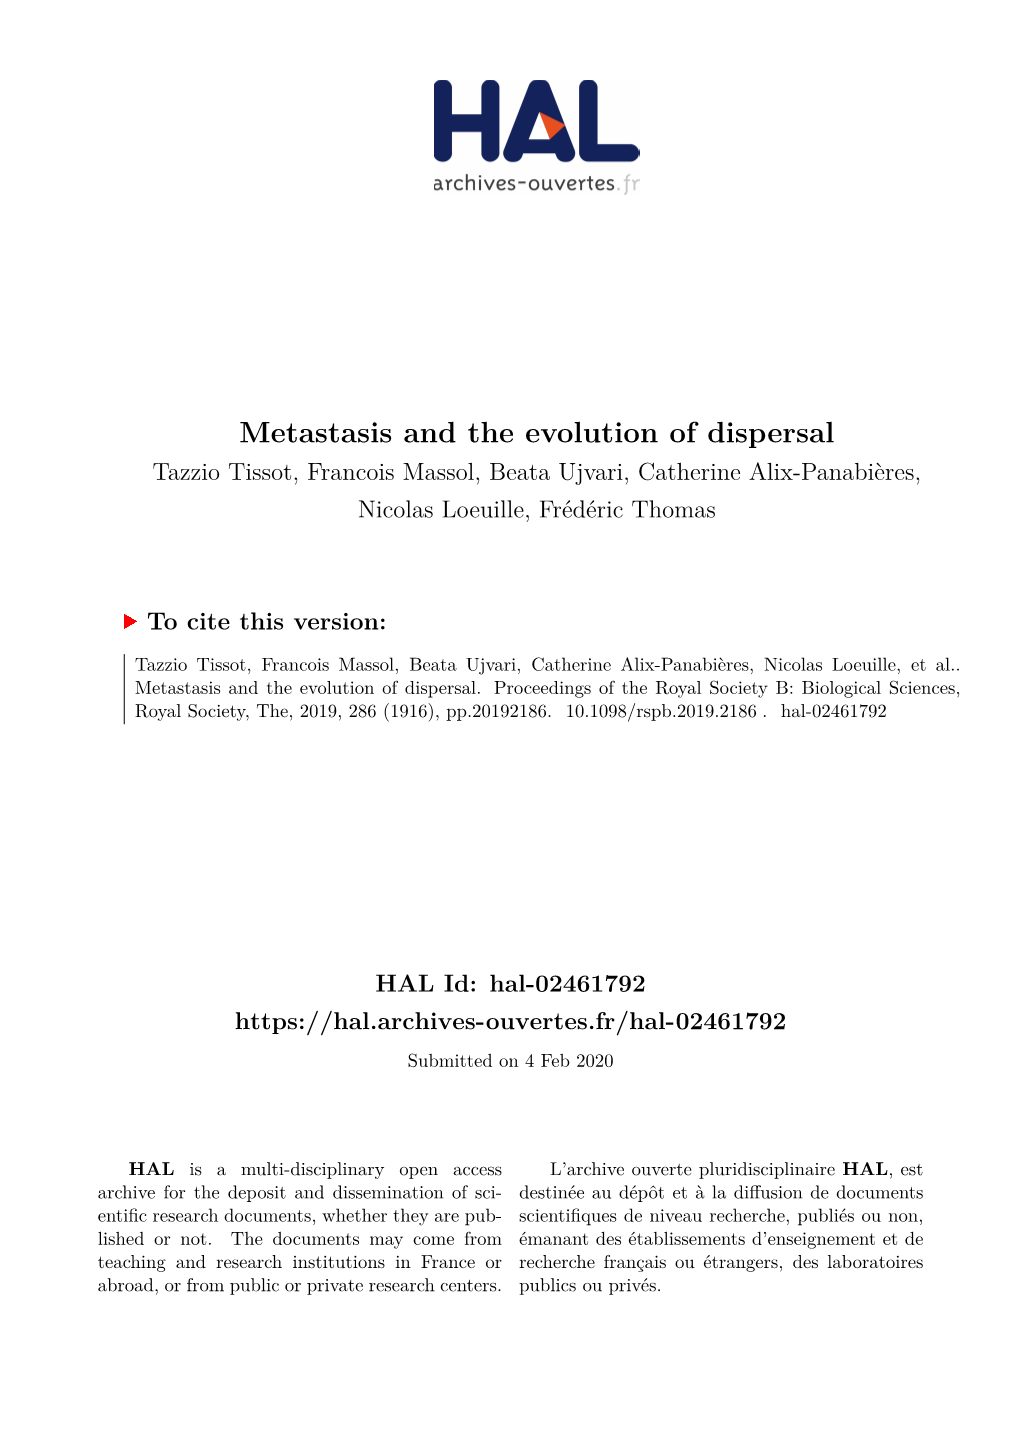 Metastasis and the Evolution of Dispersal Tazzio Tissot, Francois Massol, Beata Ujvari, Catherine Alix-Panabières, Nicolas Loeuille, Frédéric Thomas